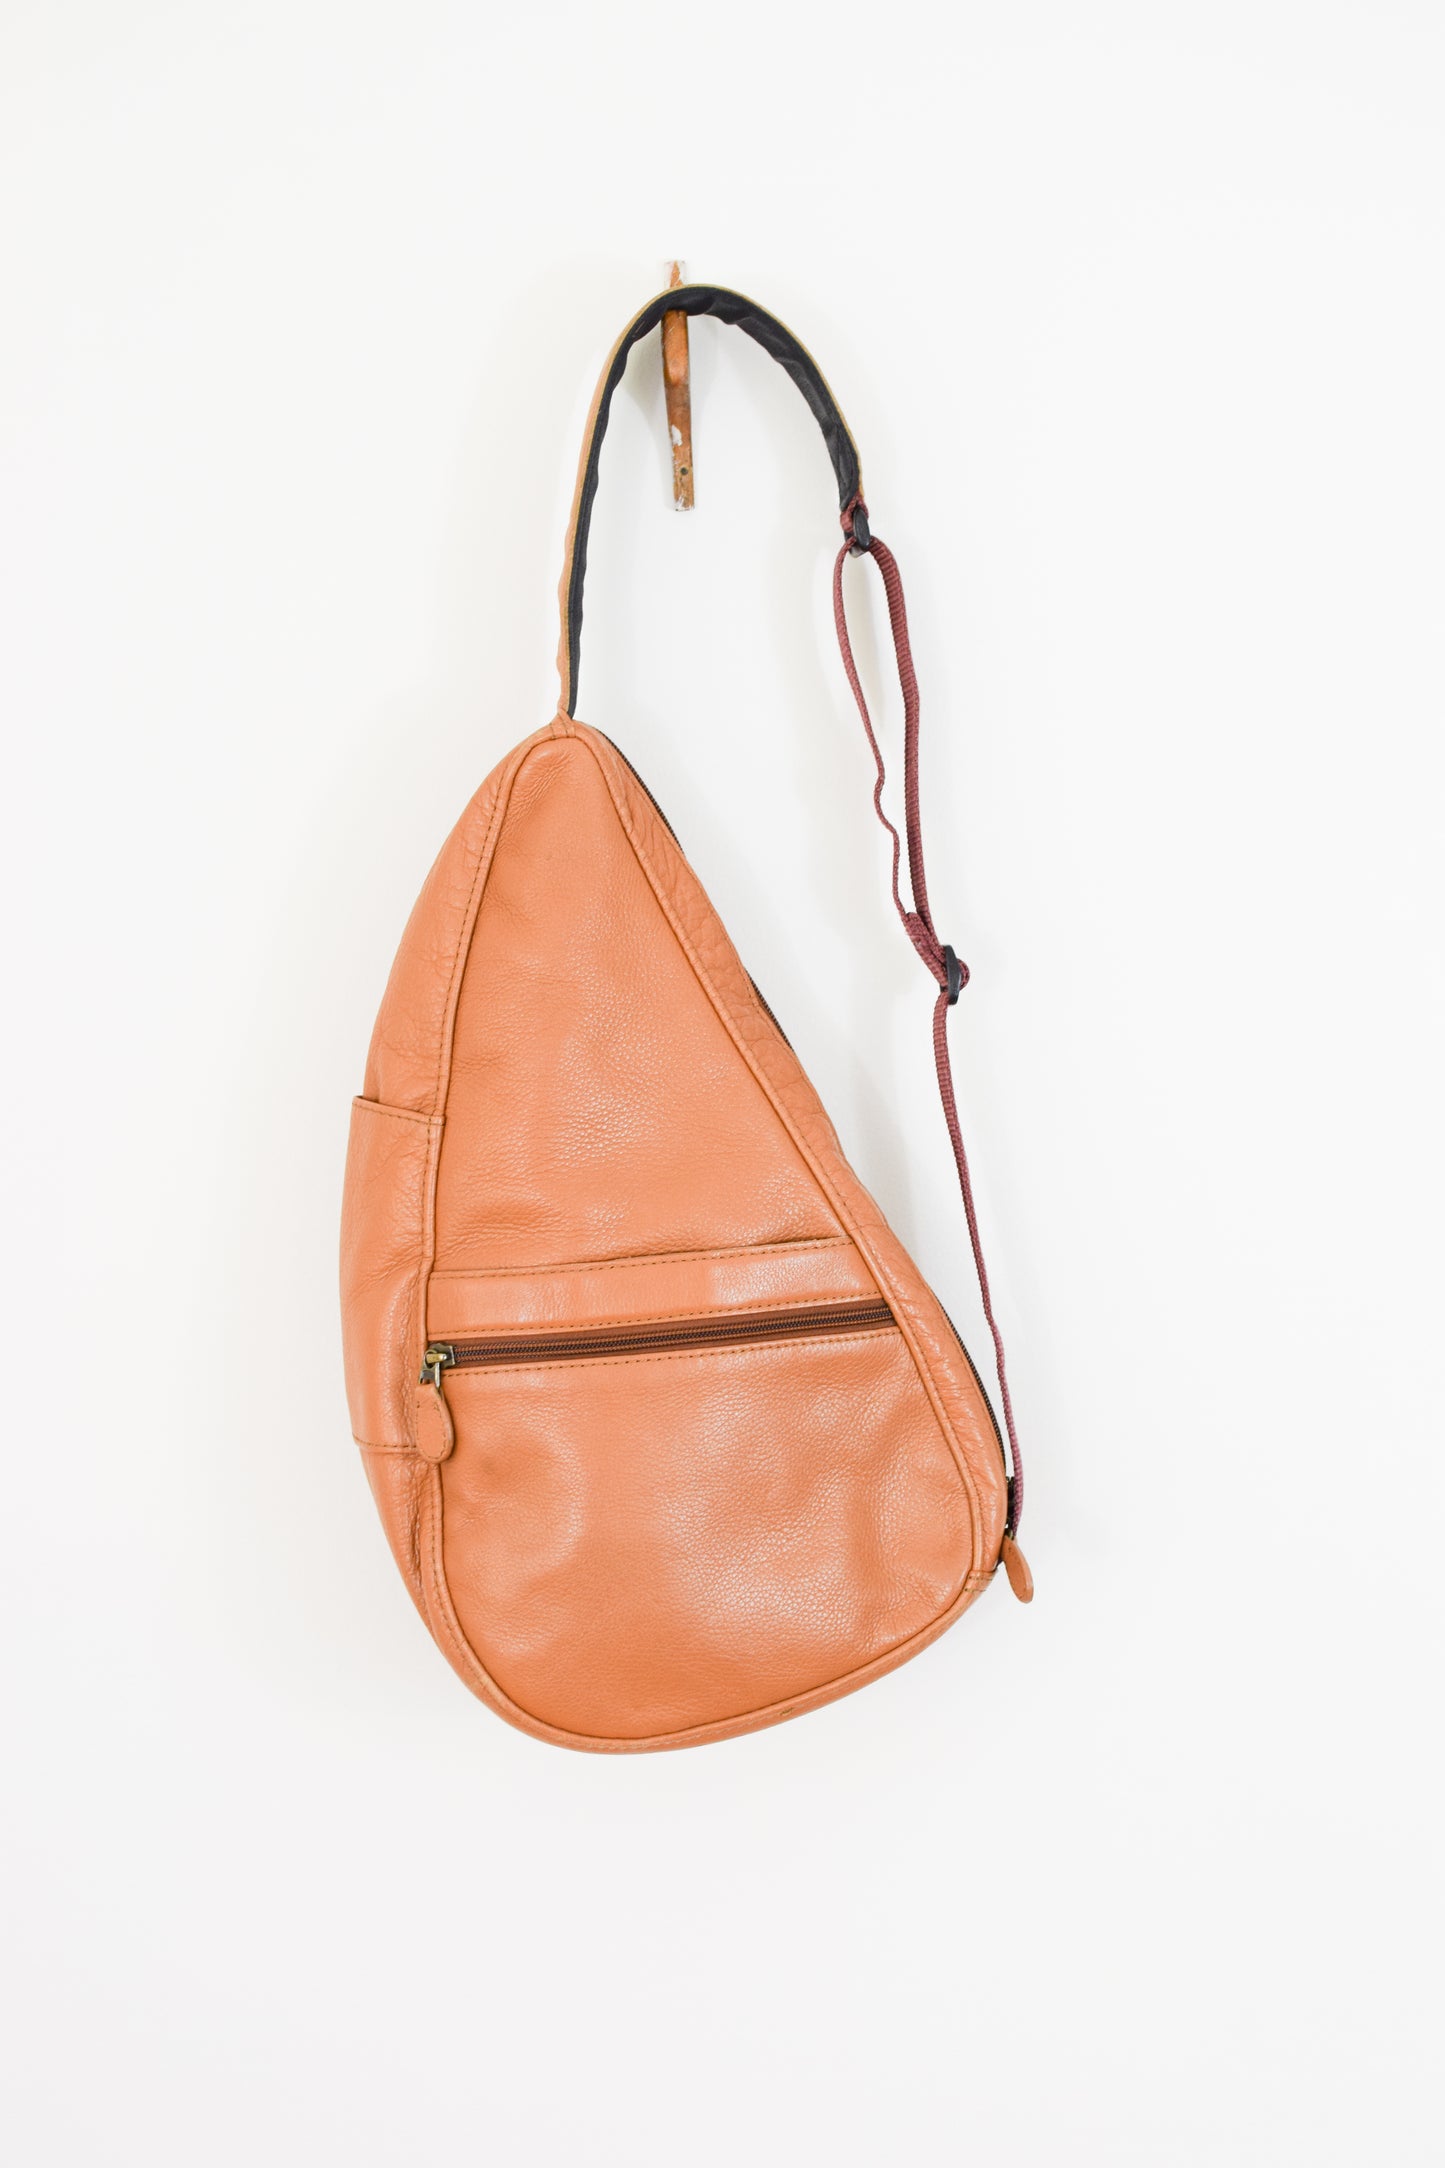 Vintage LL Bean AmeriBag Leather Bag